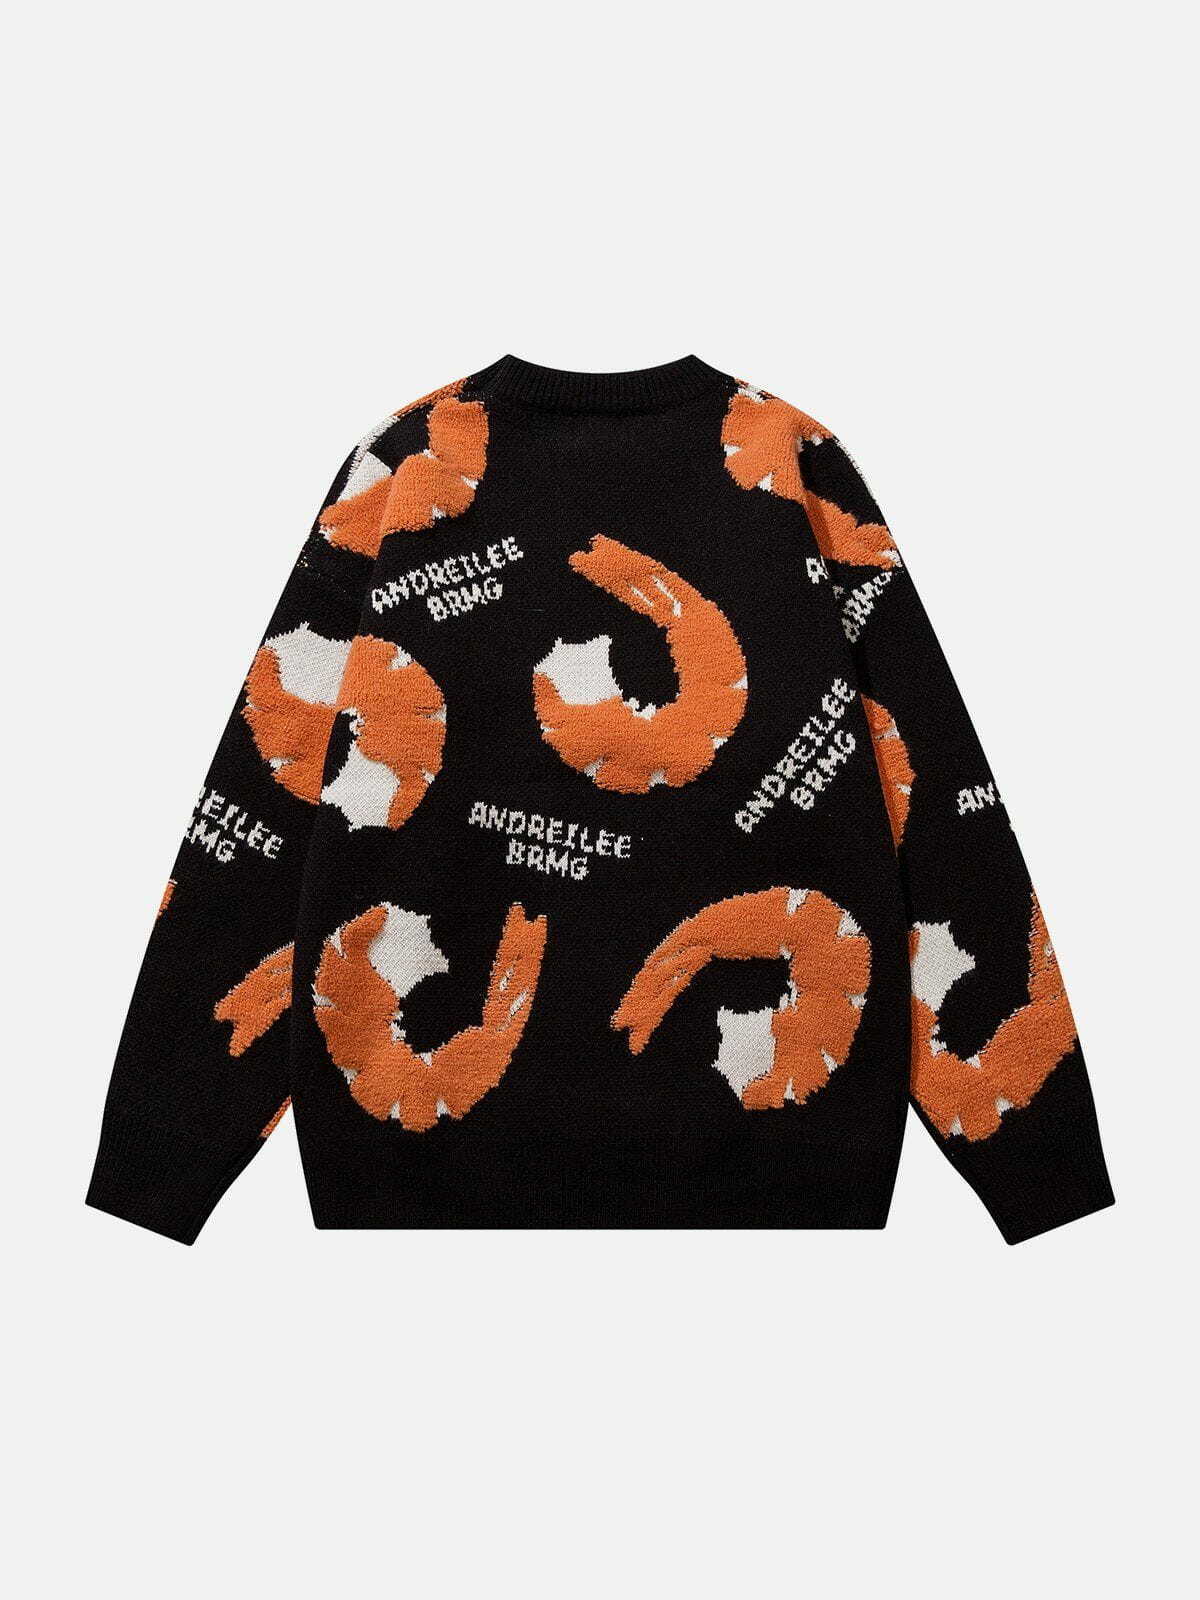 shrimp jacquard knit sweater fun & eclectic streetwear 1818